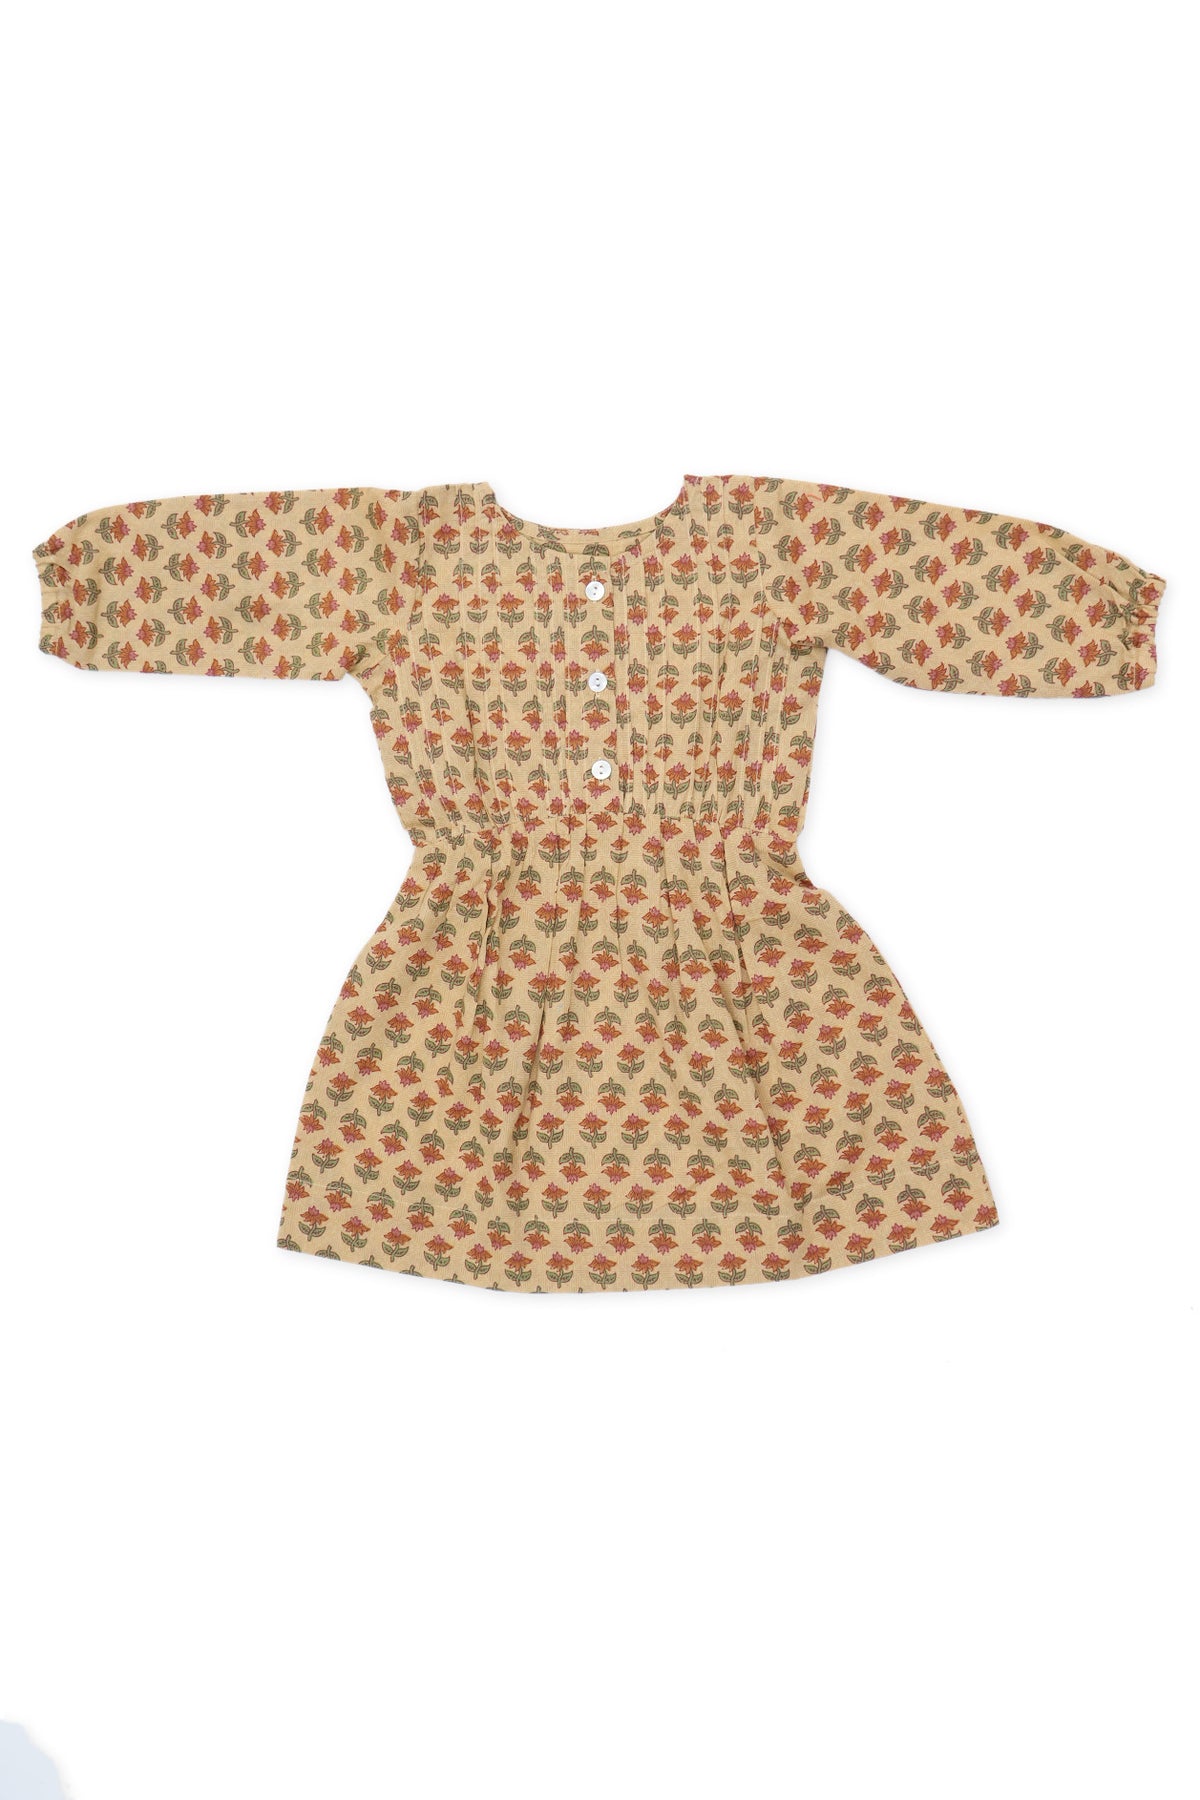 Block Printed Earthy Brown Pleated Cotton Long Sleeve Dress